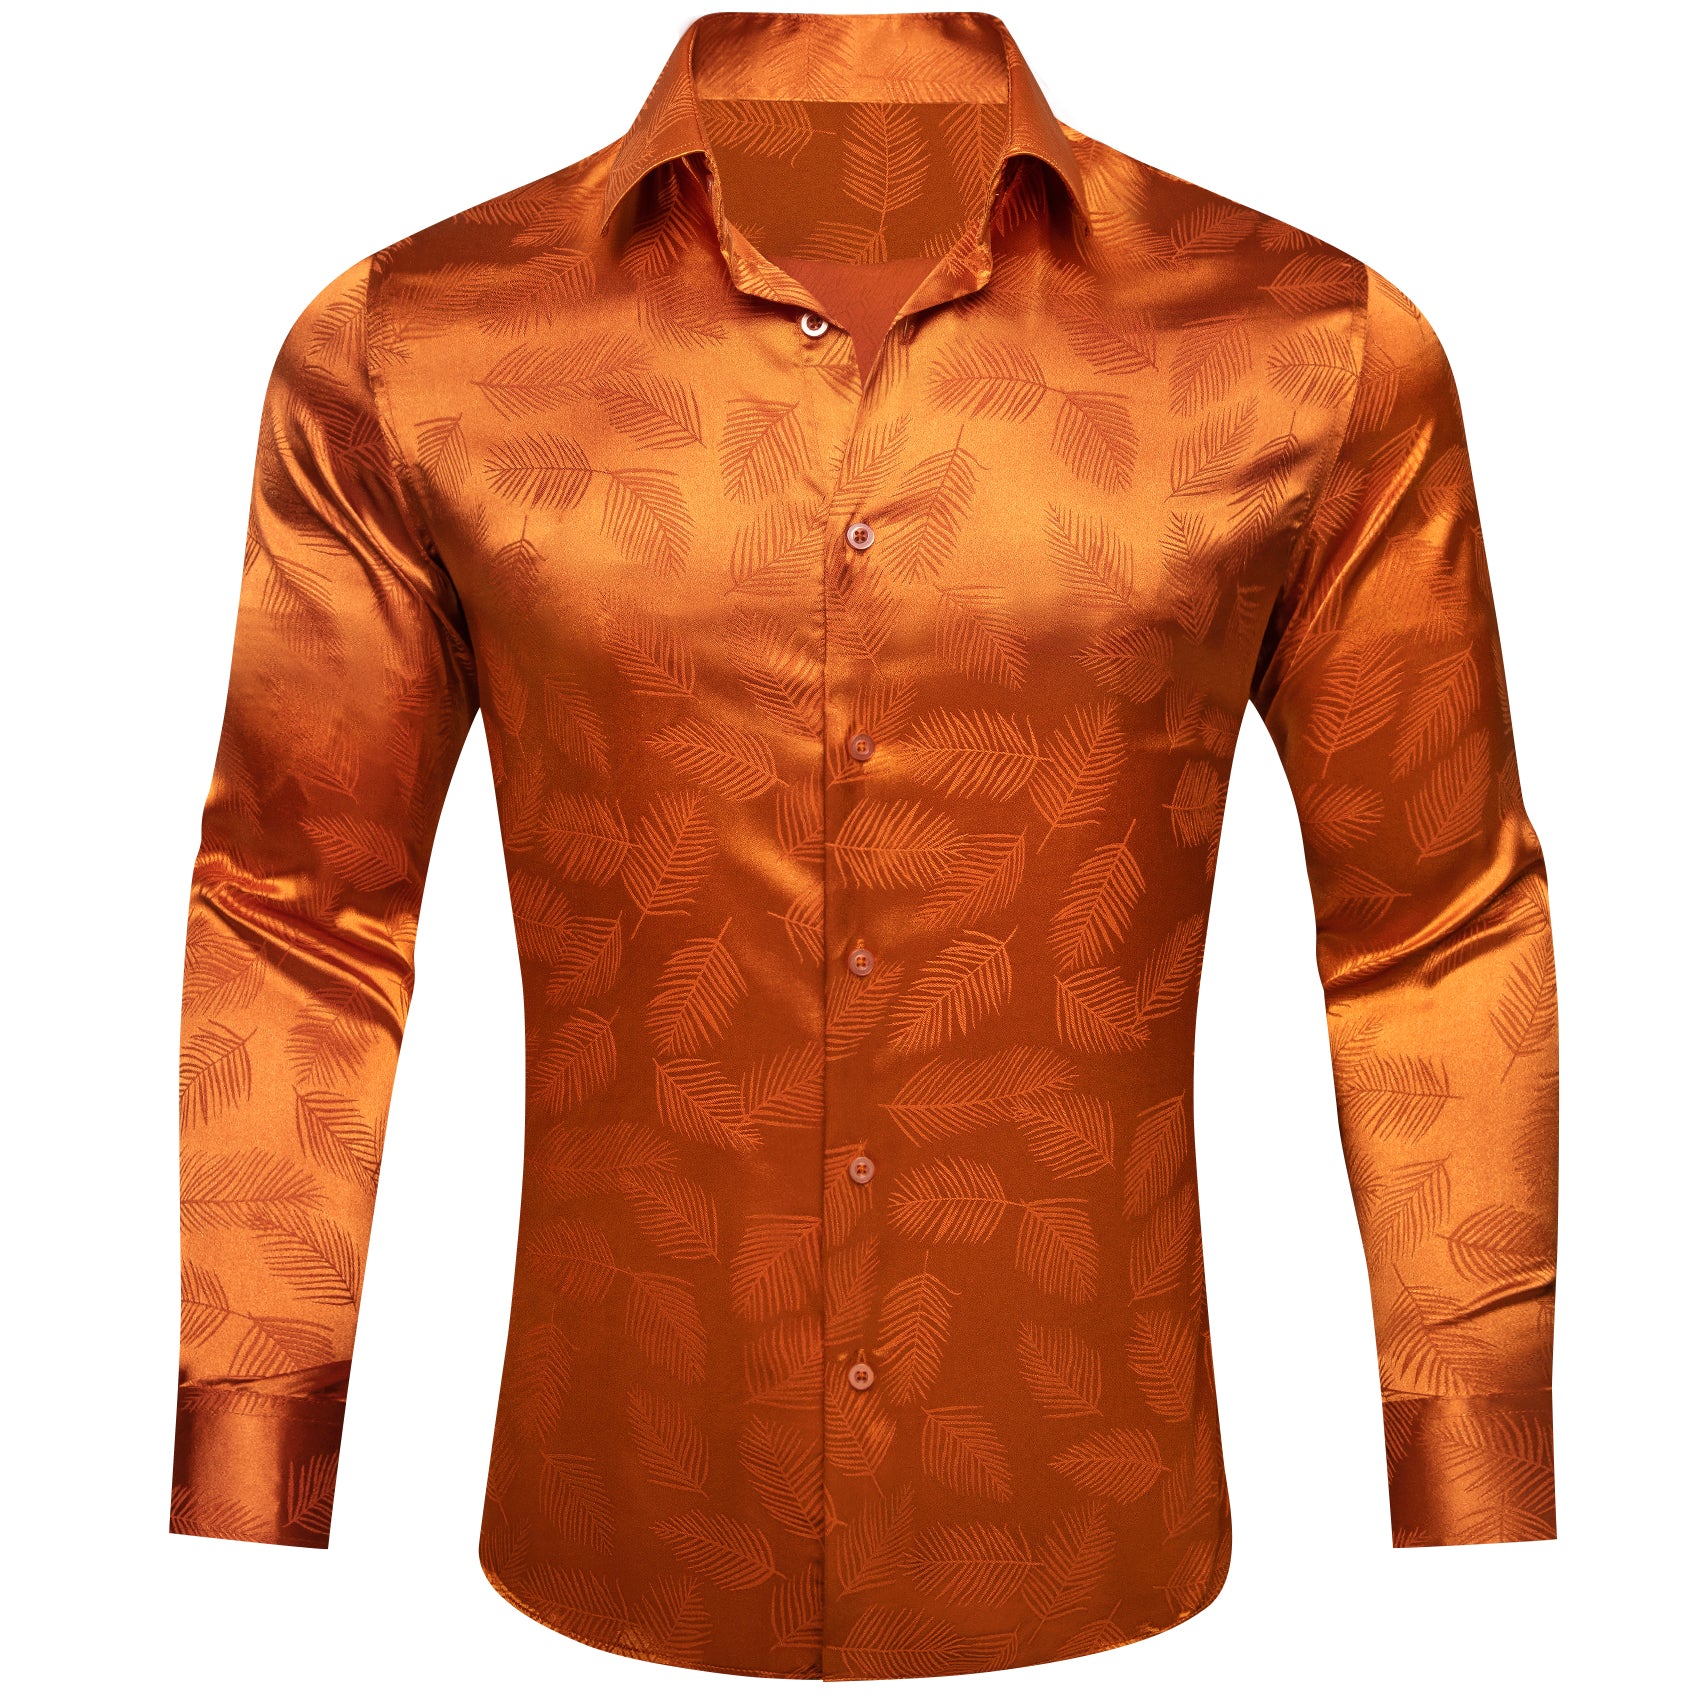 Barry.wang Button Down Shirt Orange Feather Silk Men's Long Sleeve Shirt